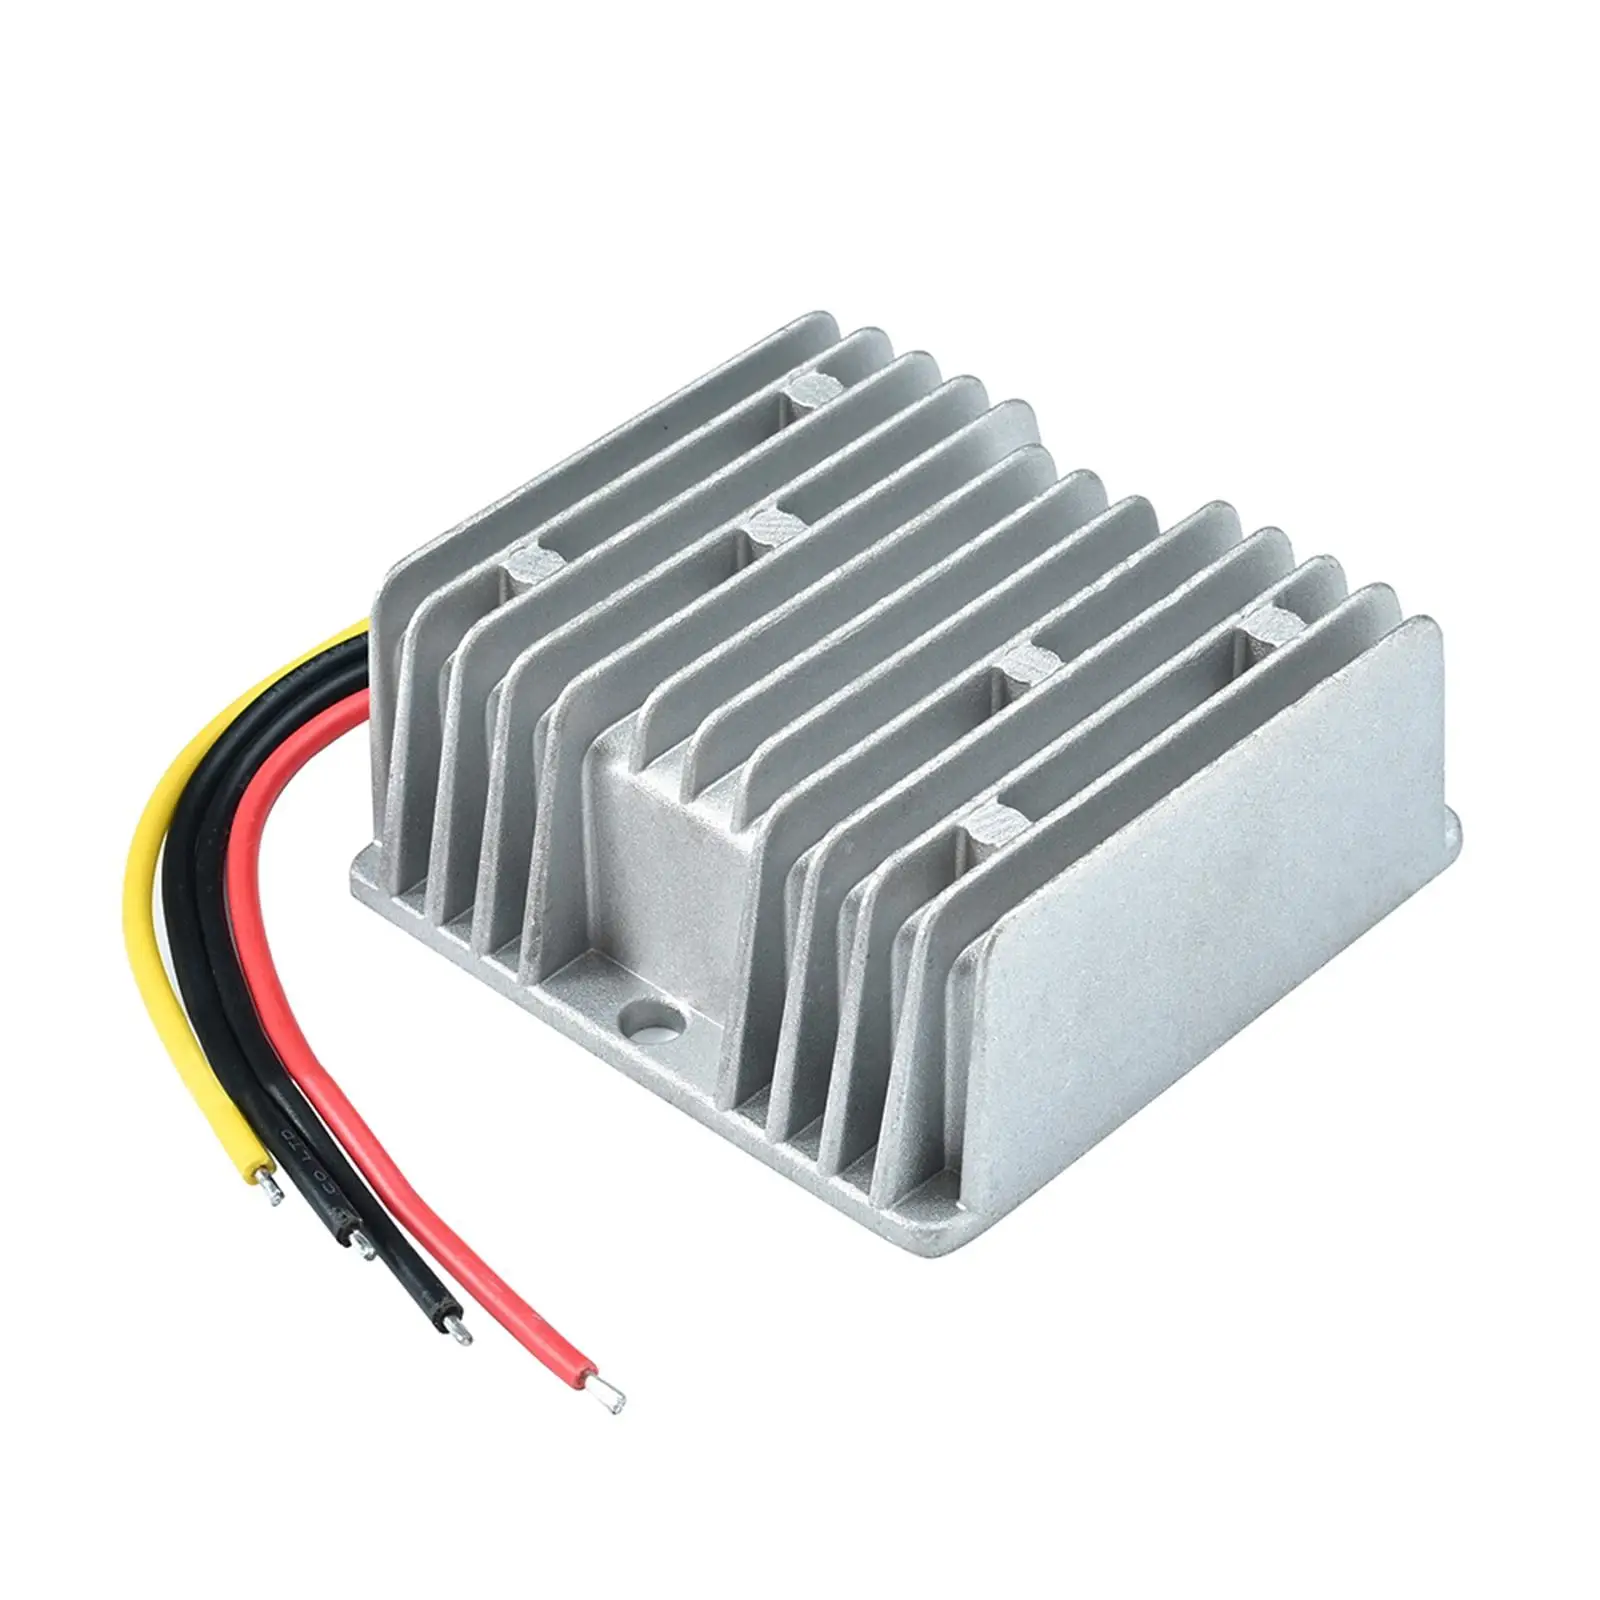 Converter IP68 Waterproof Voltage Regulator Module for Audio Car Cart